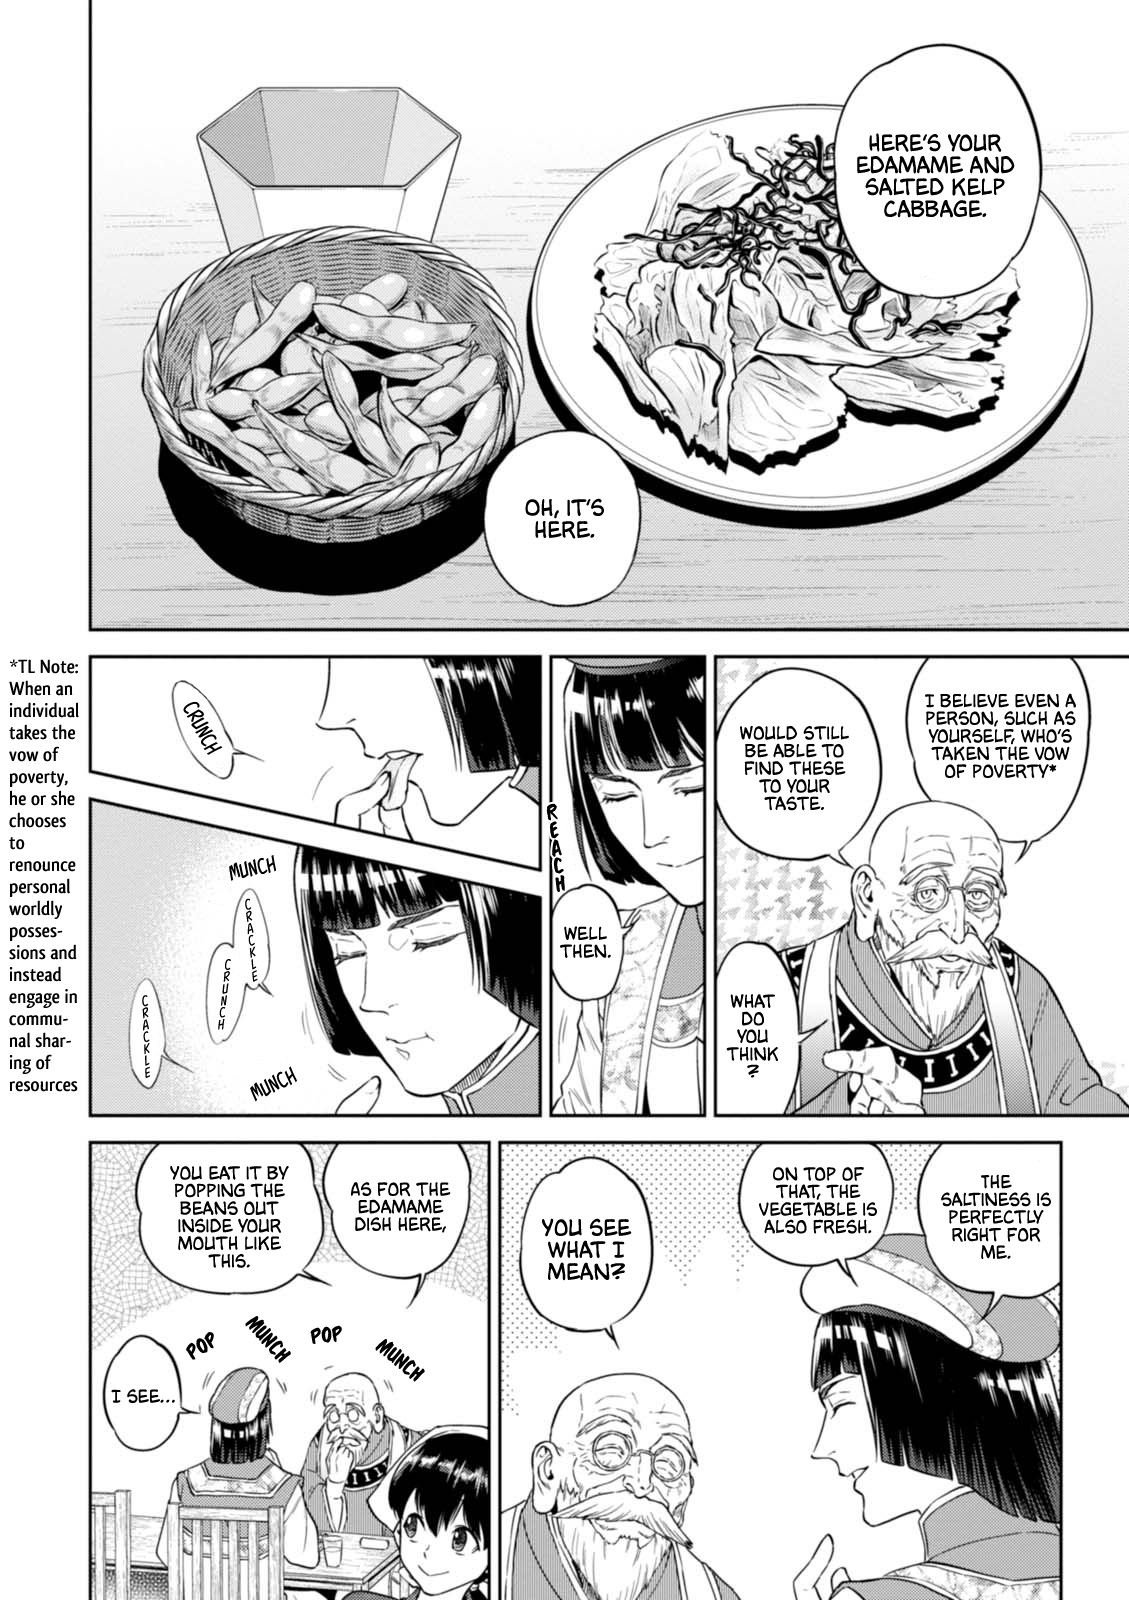 Isekai Izakaya "Nobu" Vol. 5 Ch. 30 Eggplant Agebitashi